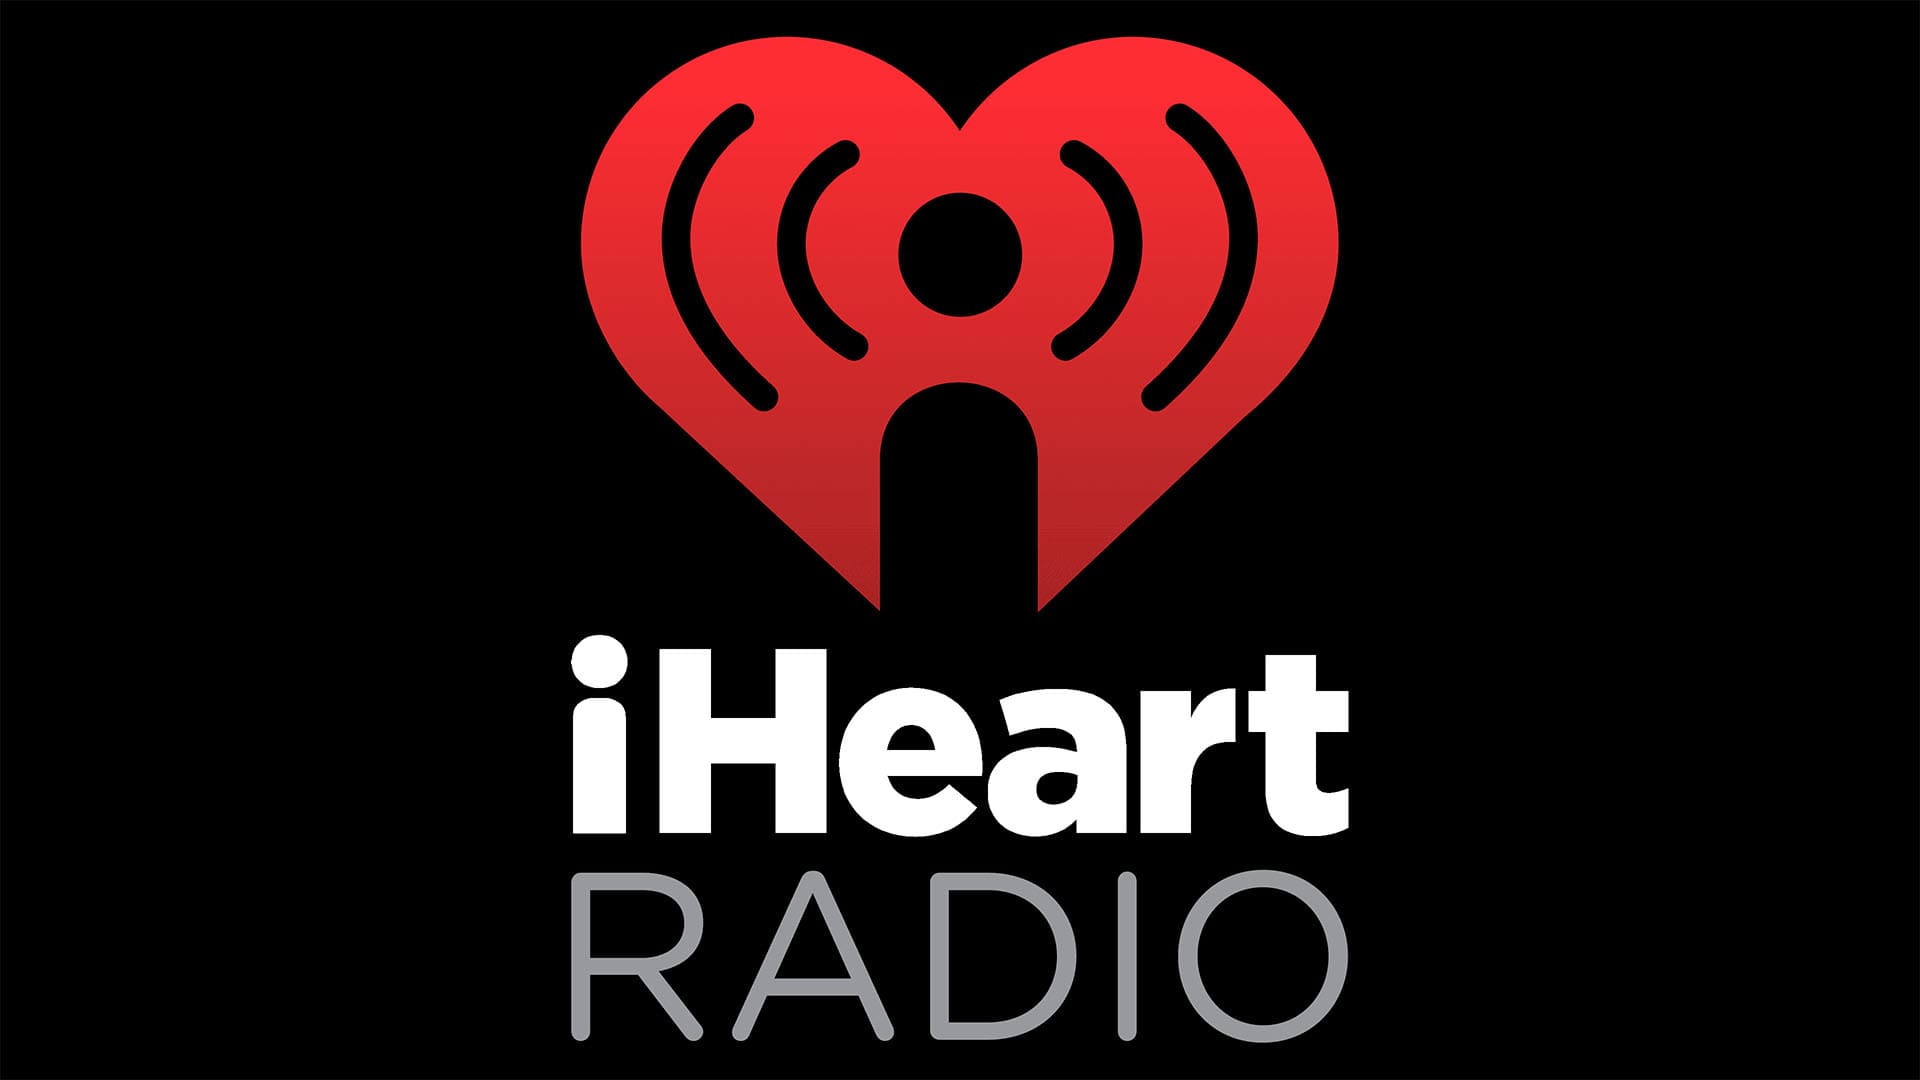 iHeartRadio Logo histoire, signification de l'emblème